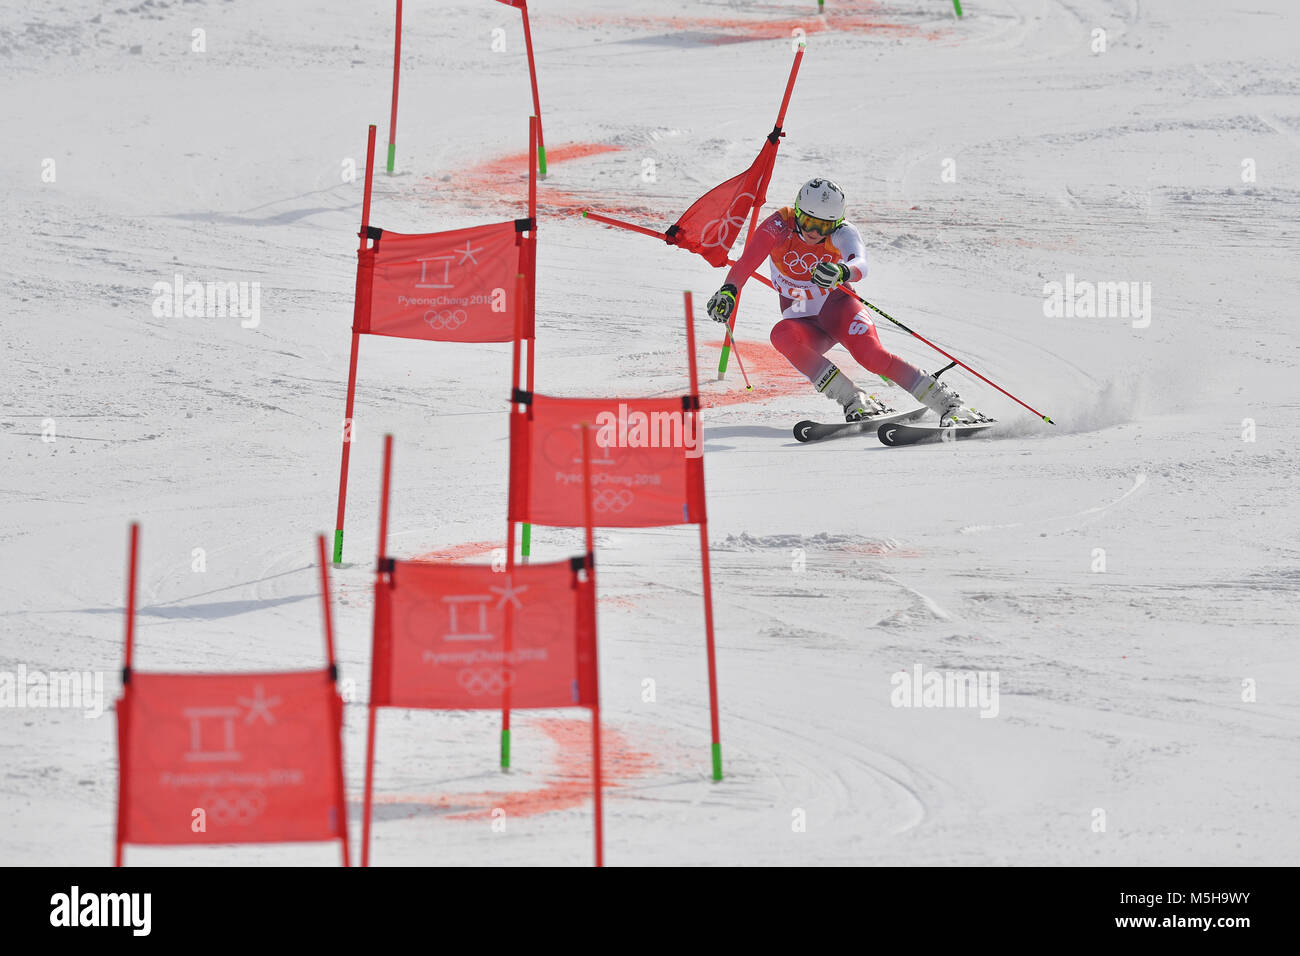 Wendy HOLDENER (SUI), Aktion, Parallelslalom. Alpine Skiing Team Event, Yongpyong Alpine Centre am 24.02.2018. Olympische Winterspiele 2018, vom 09.02. - 25.02.2018 in PyeongChang/ Suedkorea. |usage worldwide Stock Photo